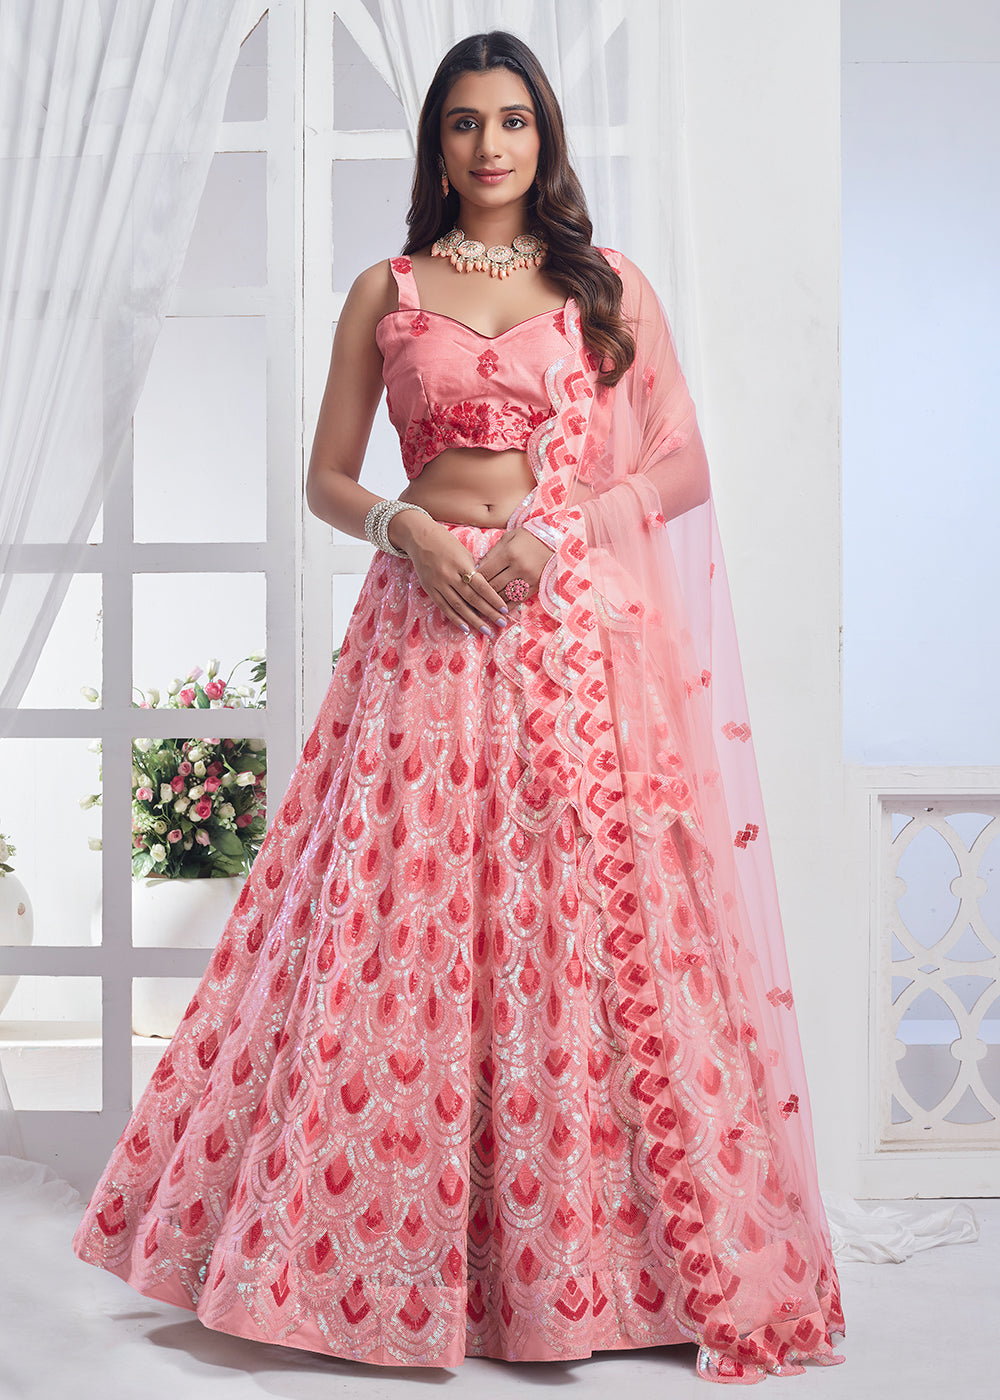 Buy Now Peach Designer Style Embroidered Wedding Lehenga Choli Online in USA, UK, Canada & Worldwide at Empress Clothing